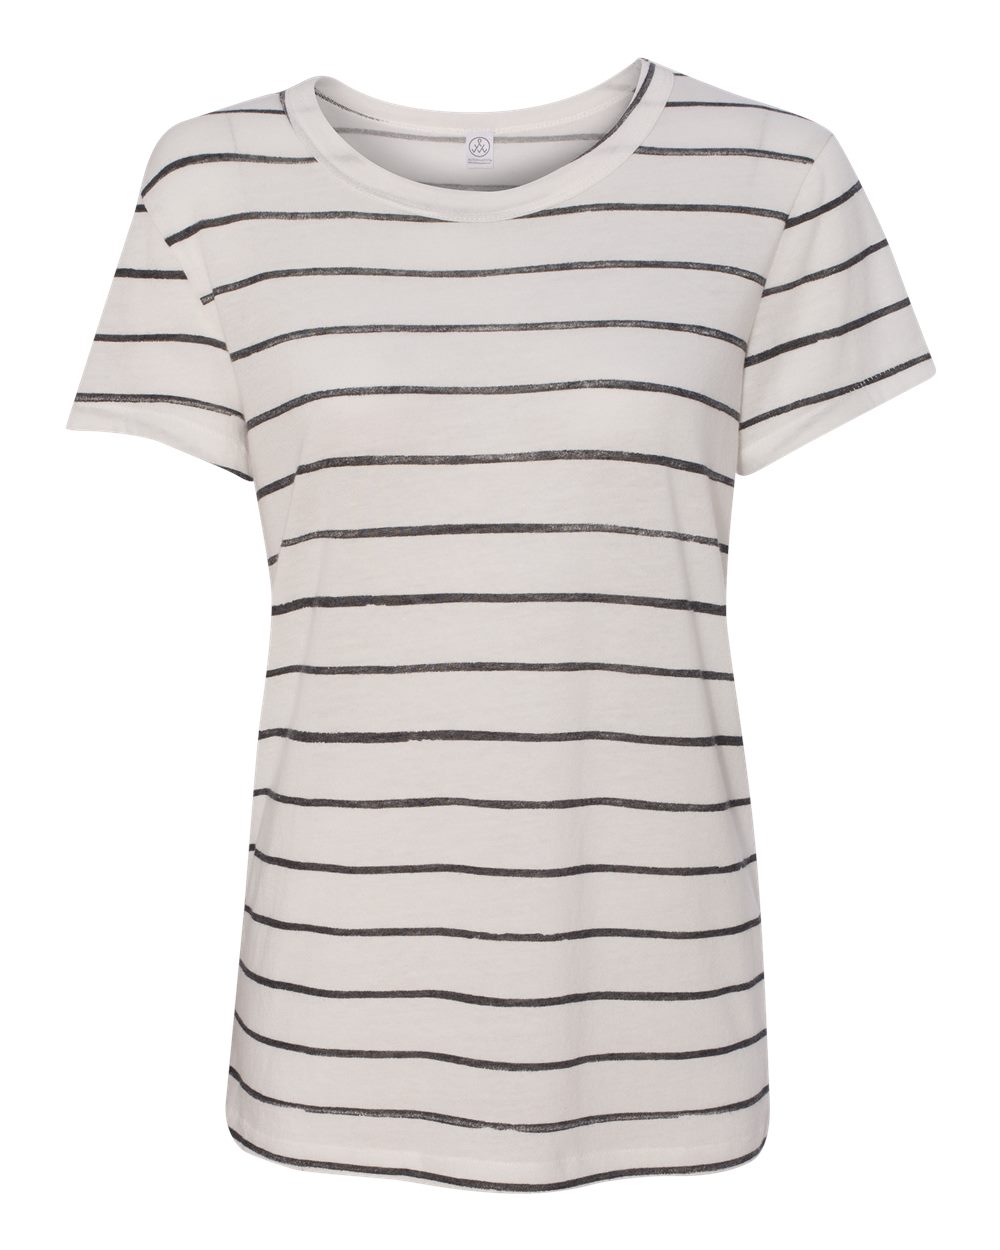 Alternative Ladies' Eco-Jersey Ideal Tee - 1940 $8.20 - Women's T-Shirts